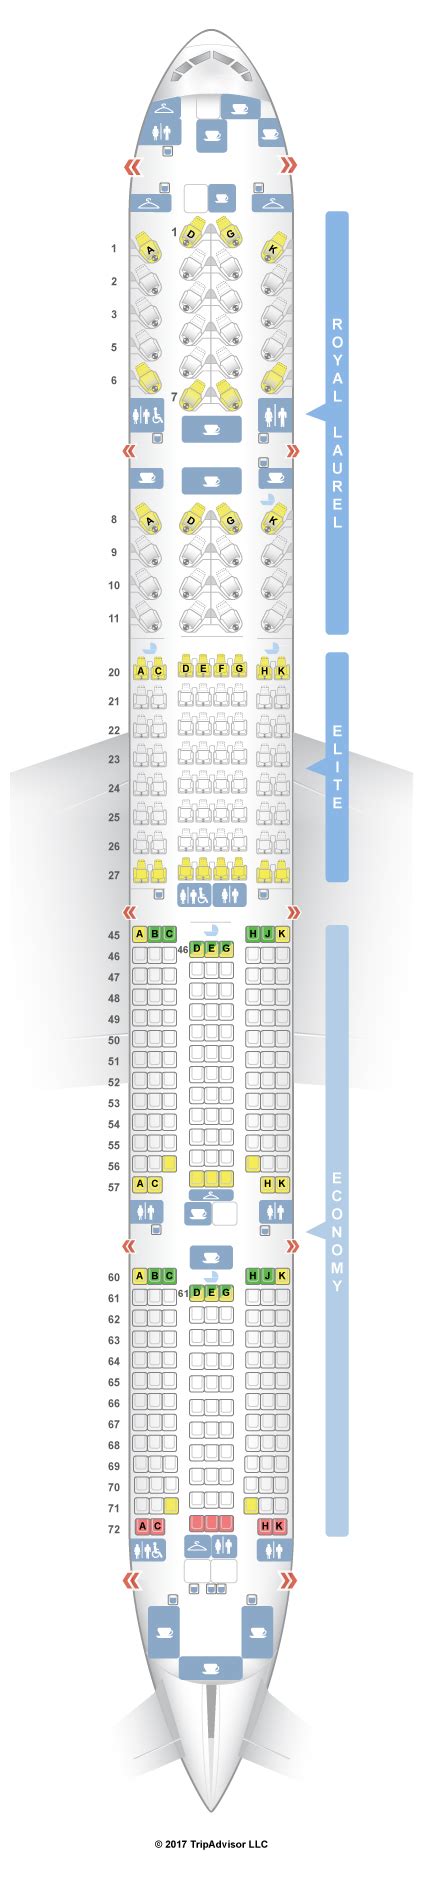 Seatguru Seat Map Eva Air Boeing 777 300er 77m V3